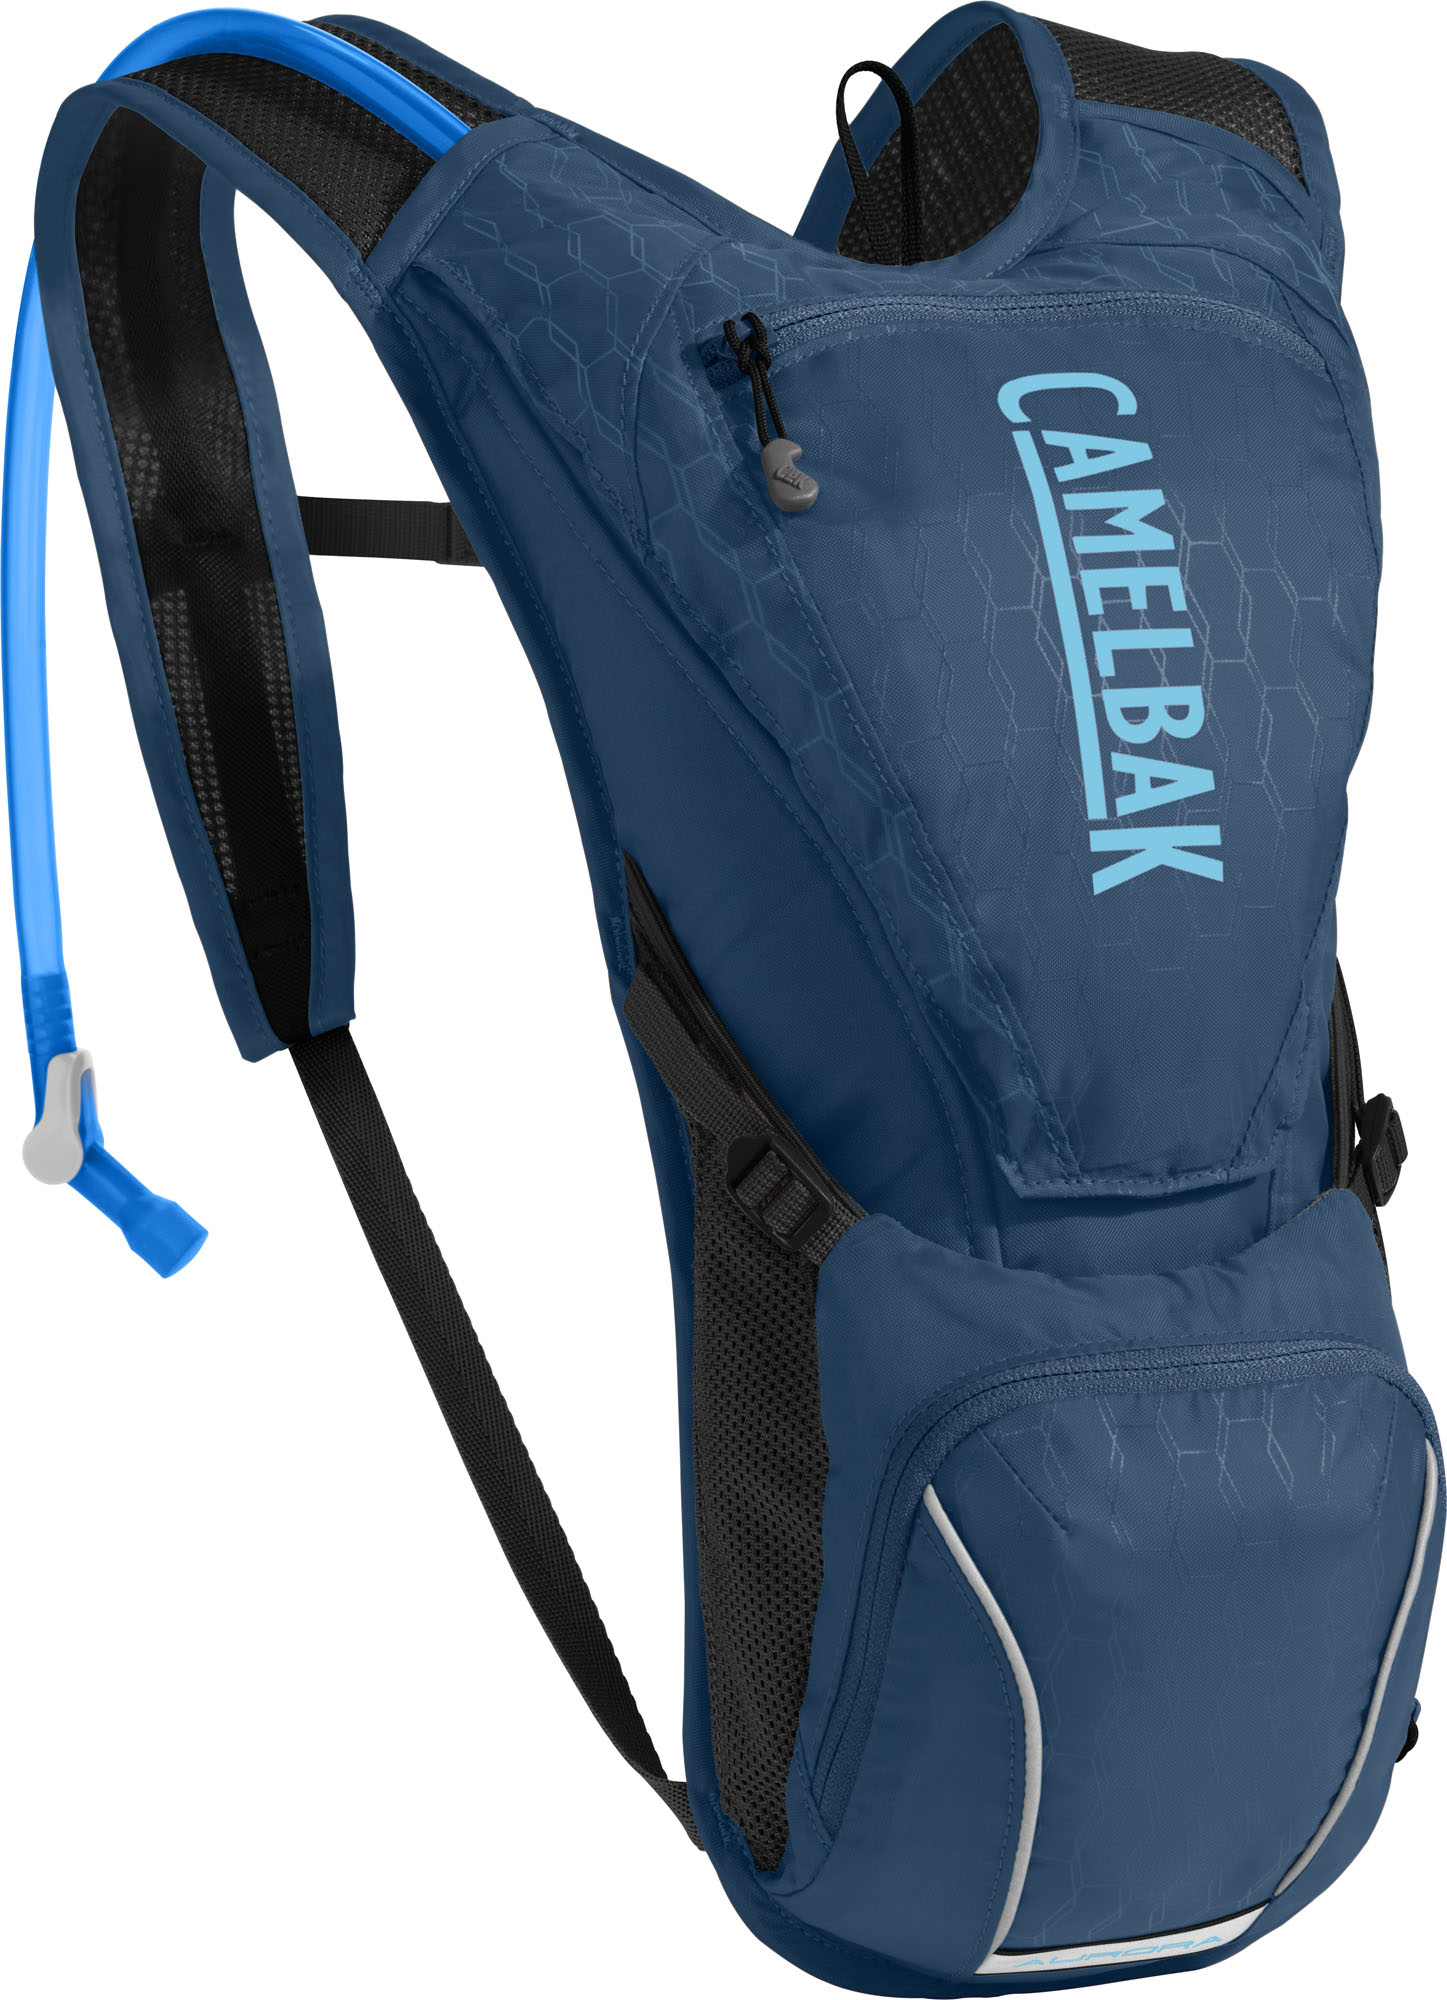 Camelbak Aurora - Cycling backpack - Women's